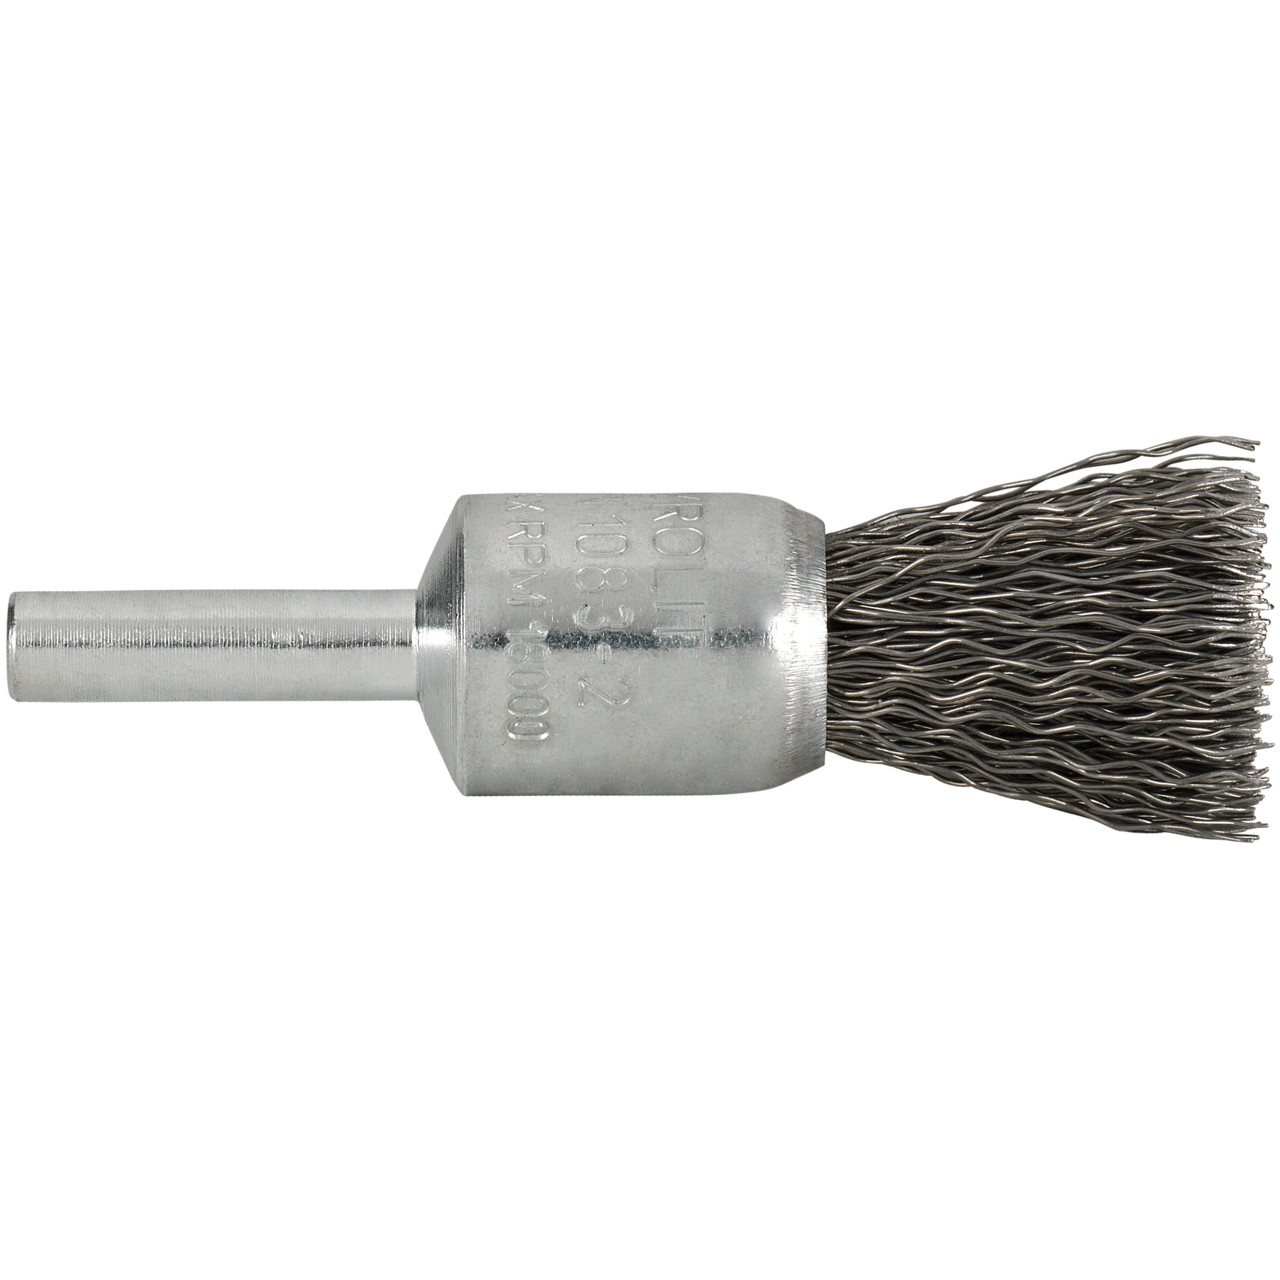 Tyrolit Brush brushes DxH-GExI 17x22-6x65 For steel, shape: 52PDW - (brush brushes), Art. 890721